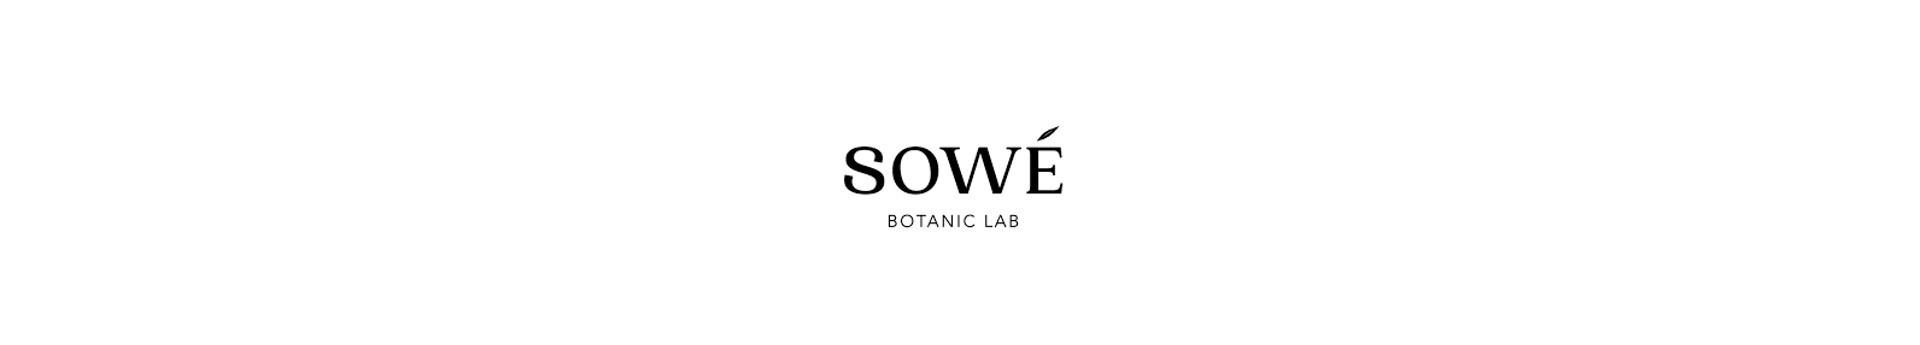 Sowé botanic lab